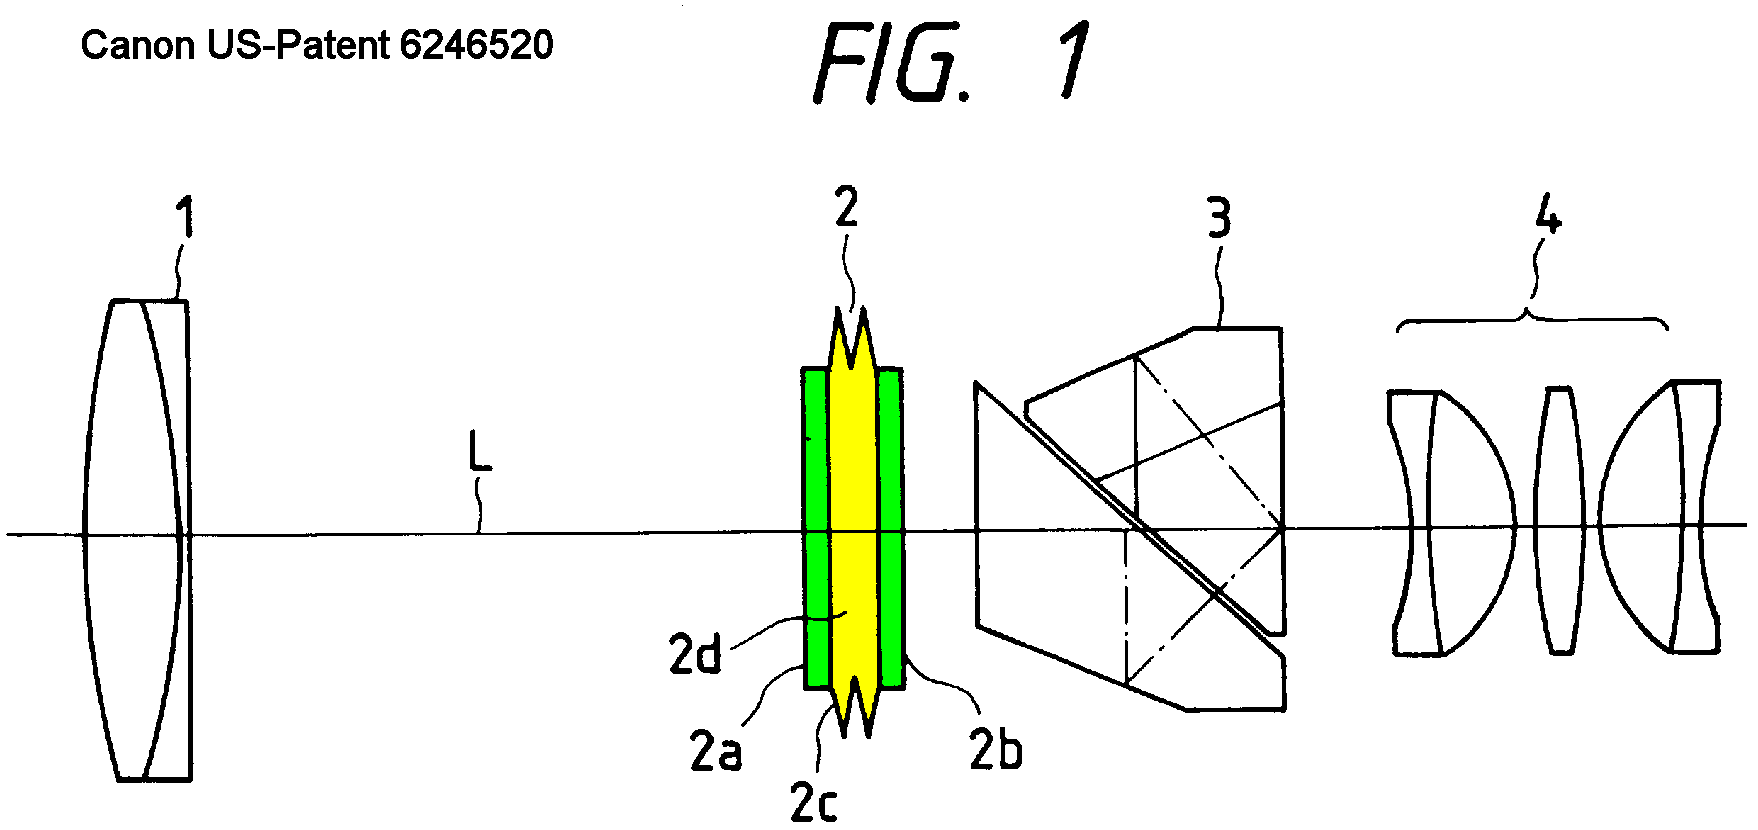 Canon Vari-Angle mit elektronischer Steuerung (US-Patent 6246520)